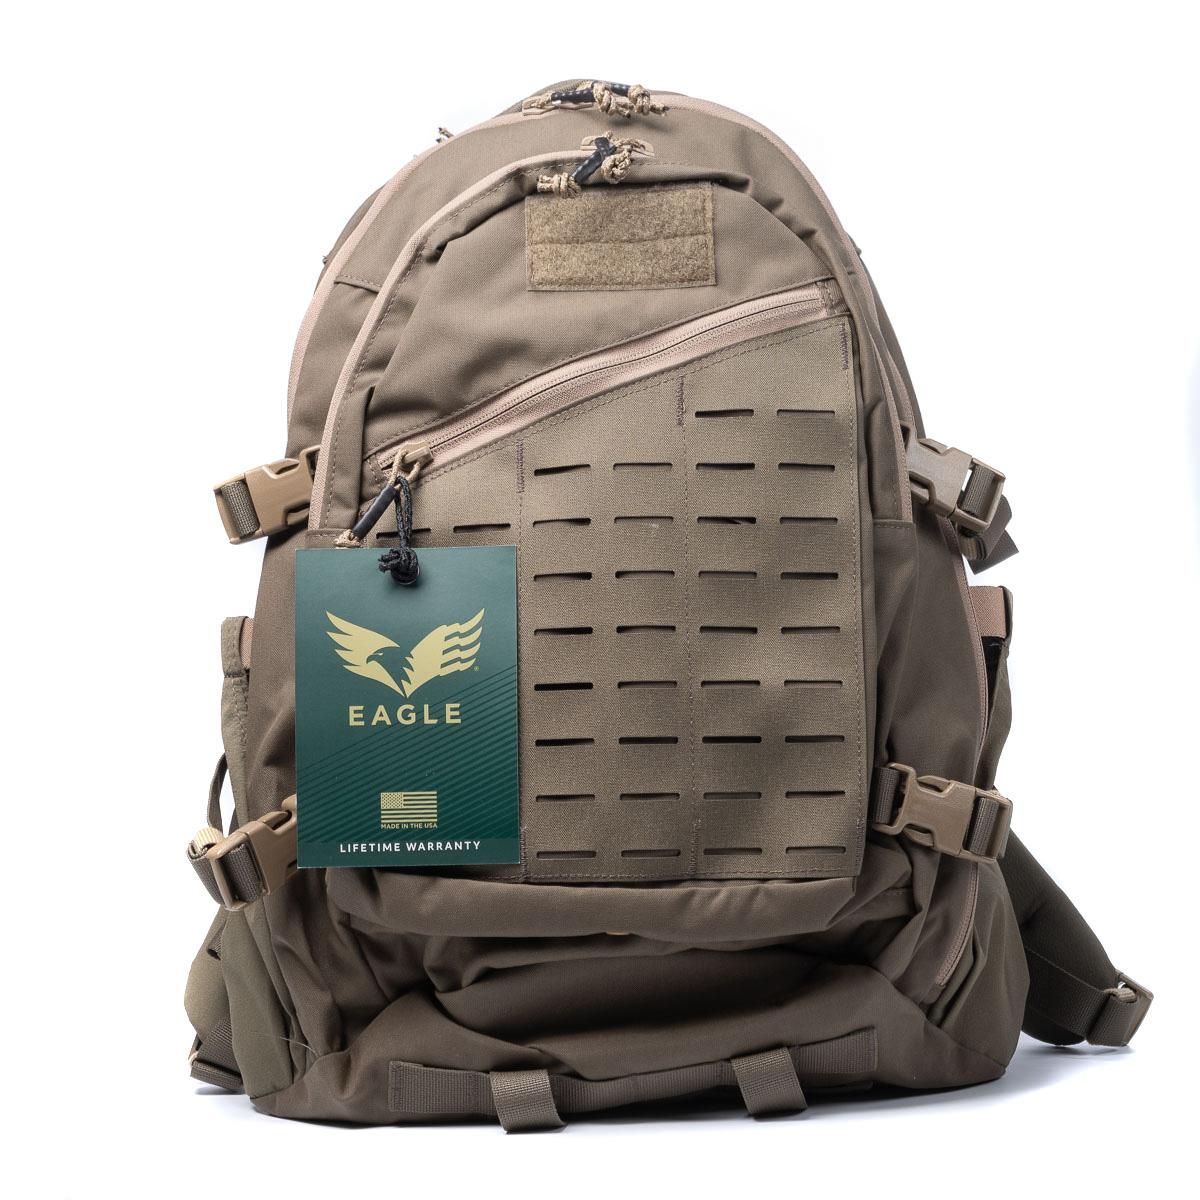 Eagle 3 Day Assault Pack